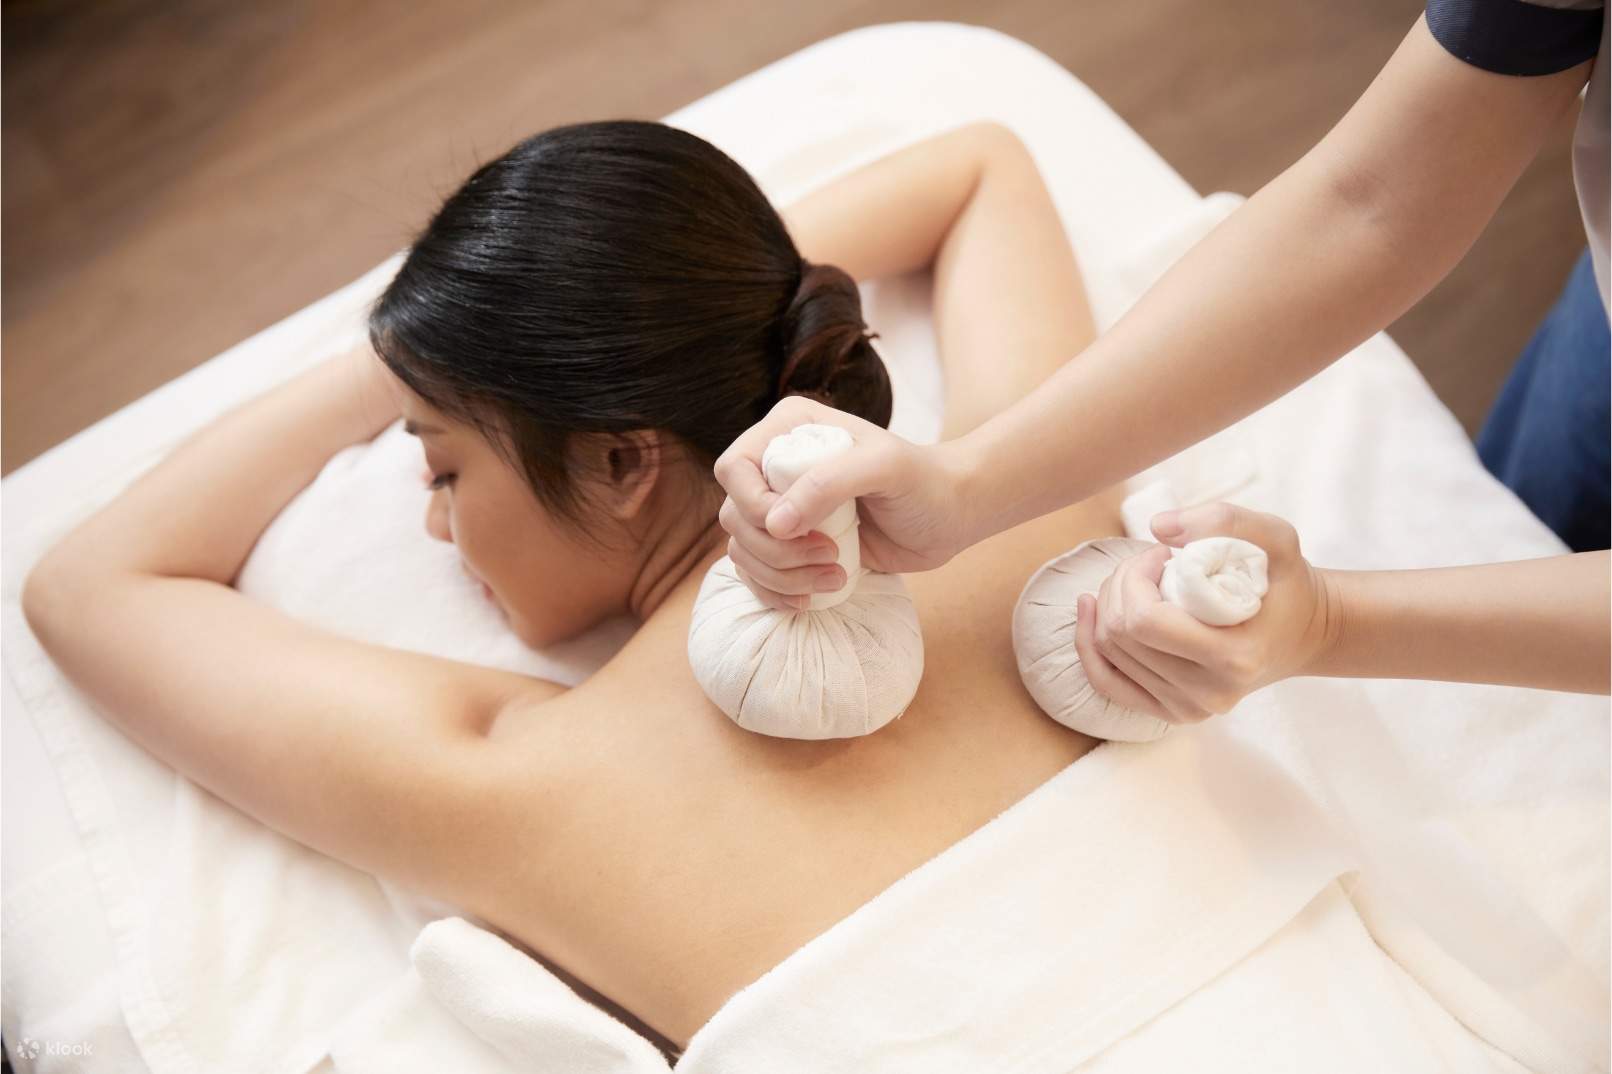 Thai massage Massage Montreal